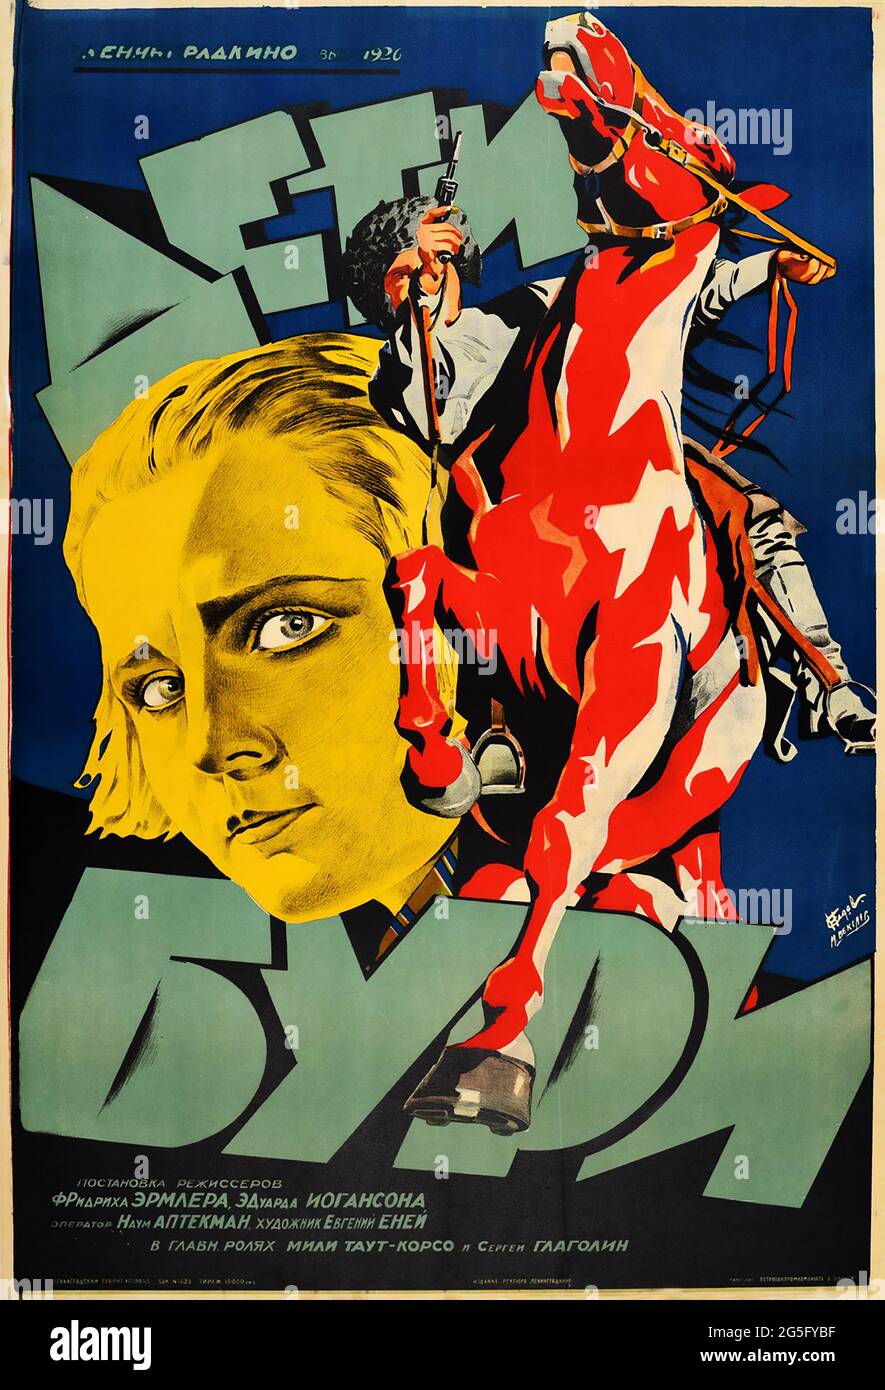 Vintage Poster – Children Of The Storm – Soviet Film Russian Constructivism, 1926 Stock Photo